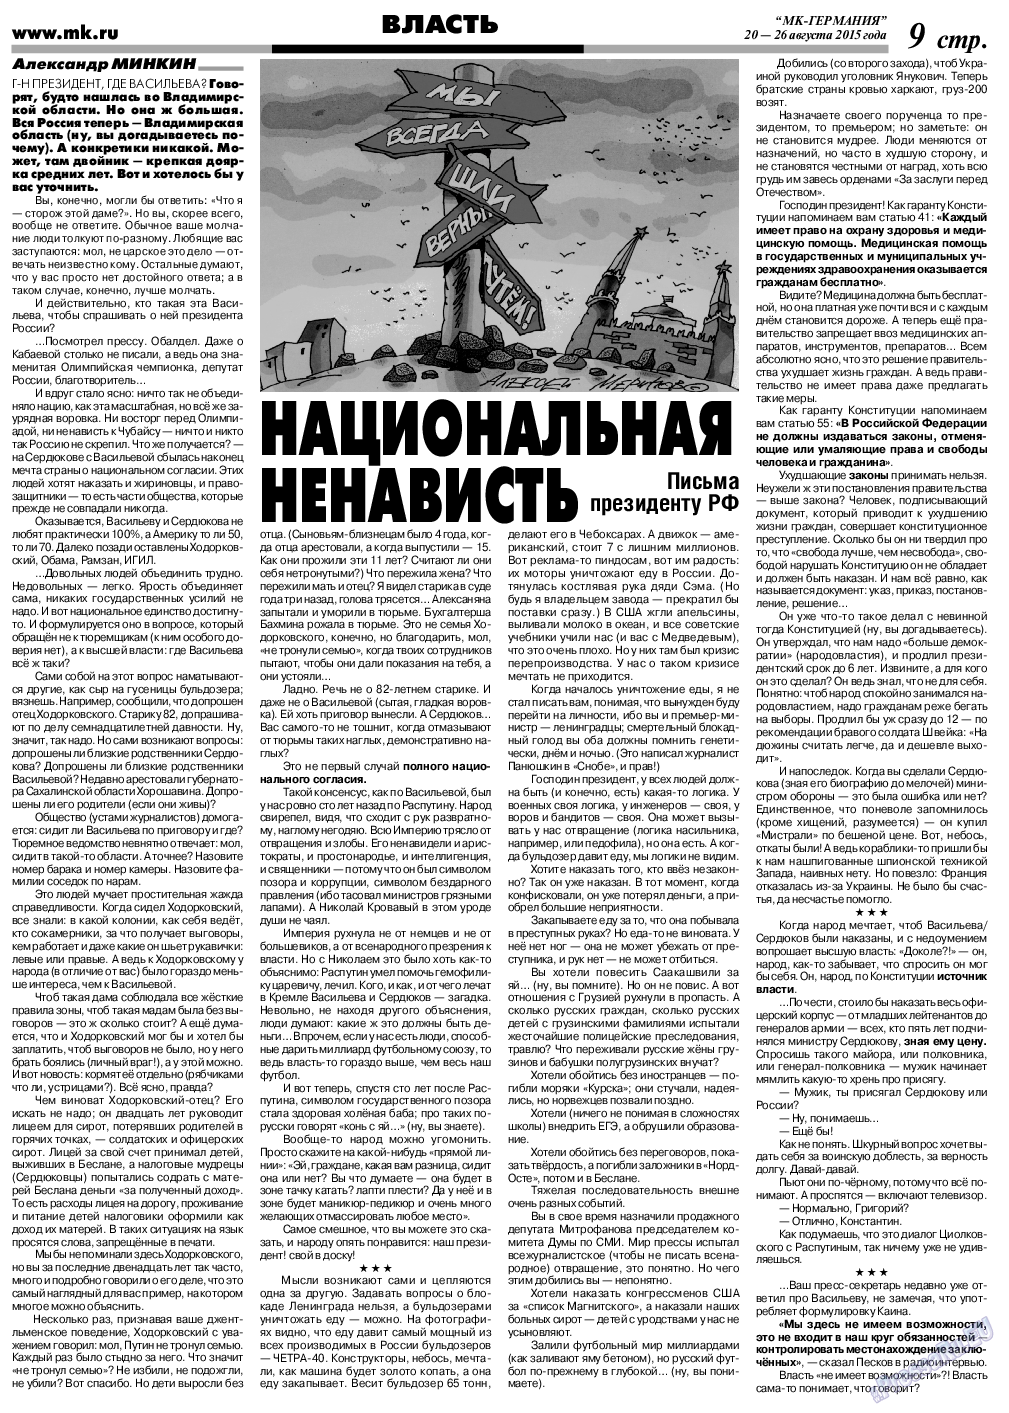 МК-Германия, газета. 2015 №34 стр.9